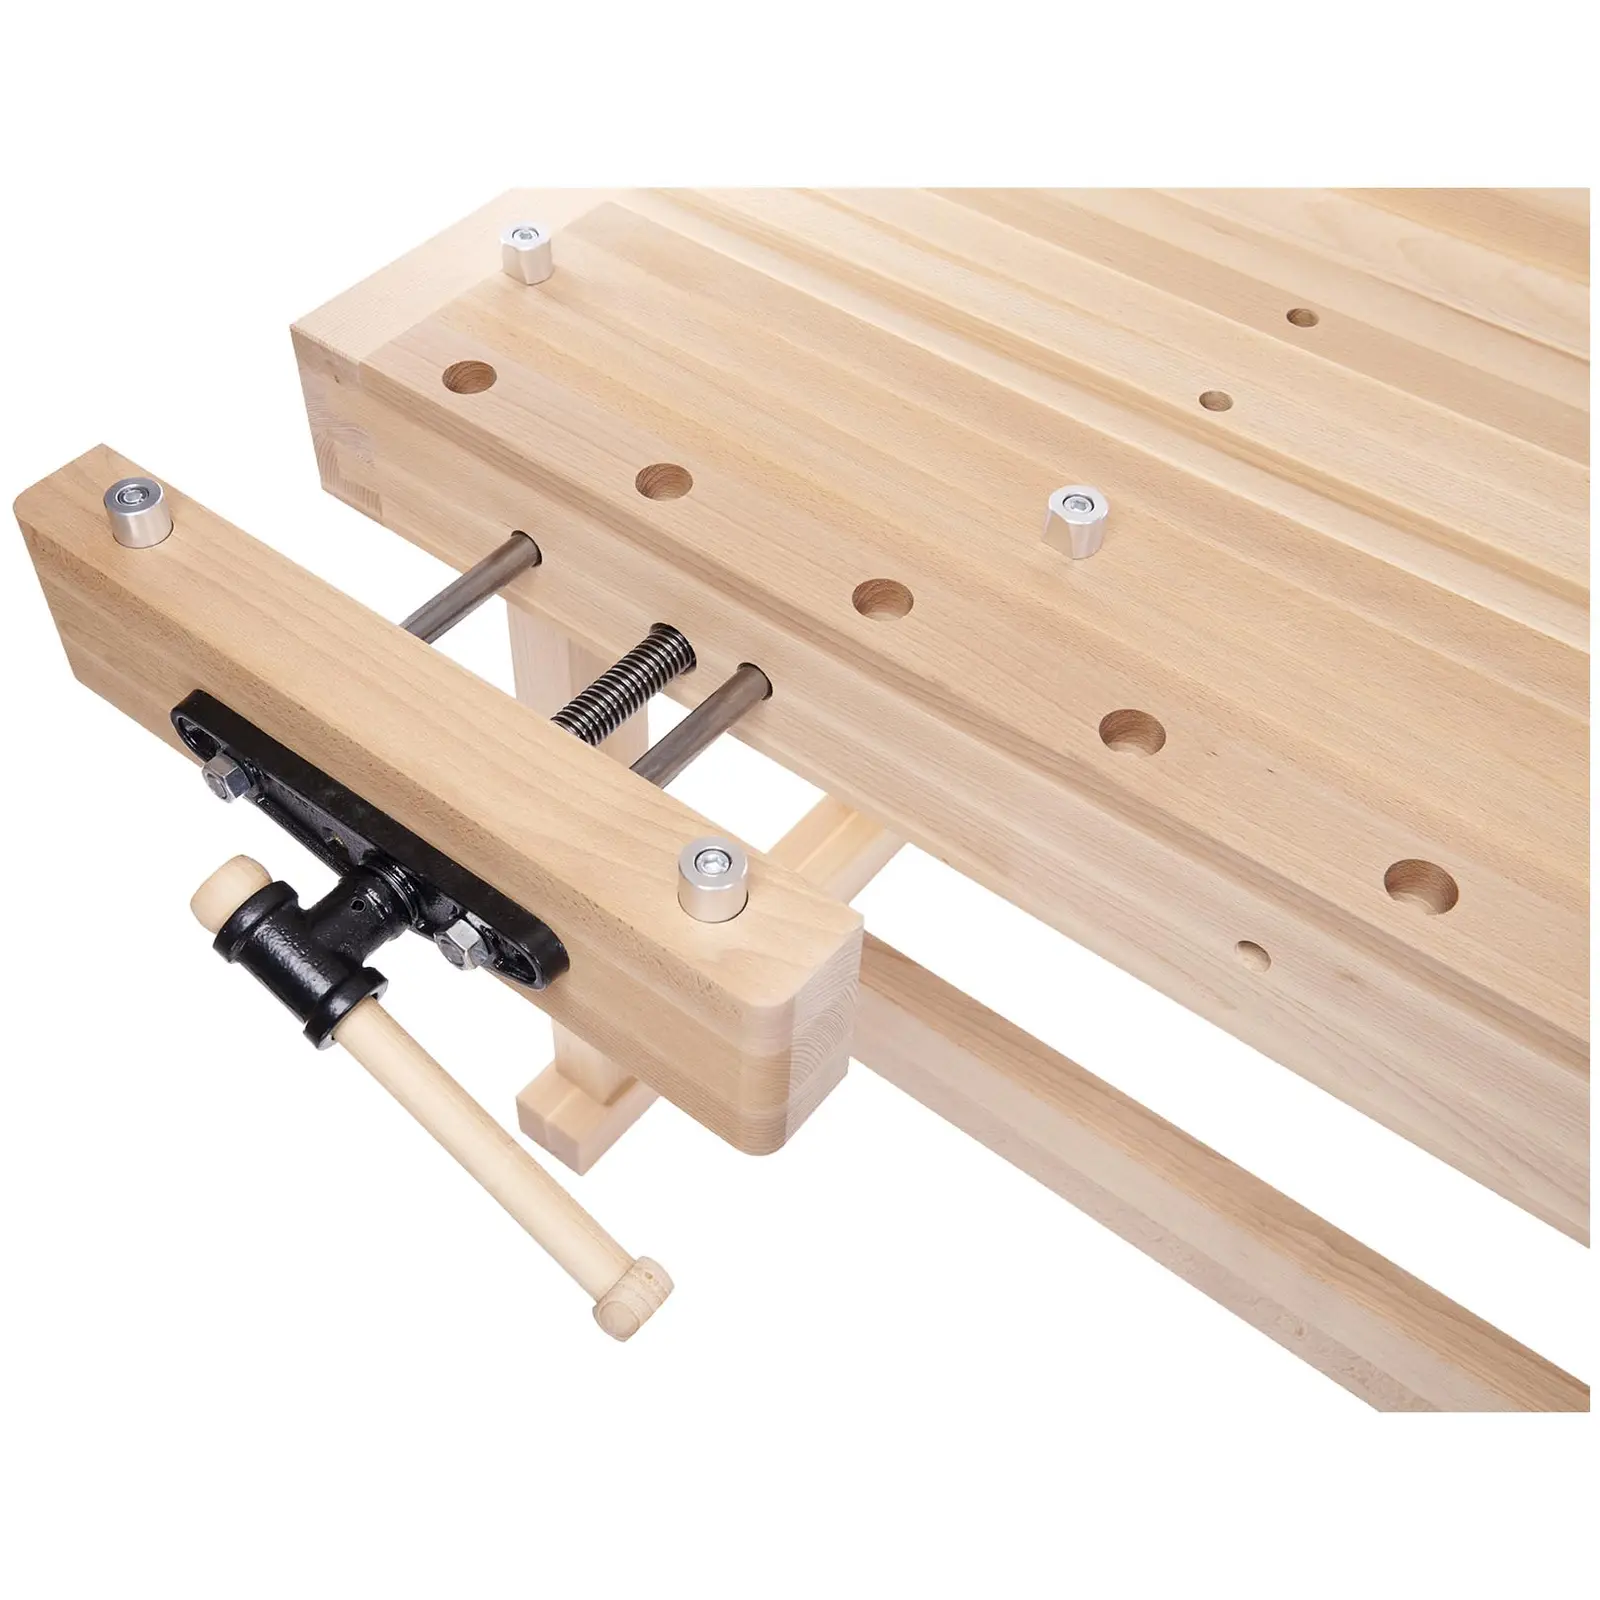 Workbench - beech wood - 2 vices - 1,910 x 620 mm worktop